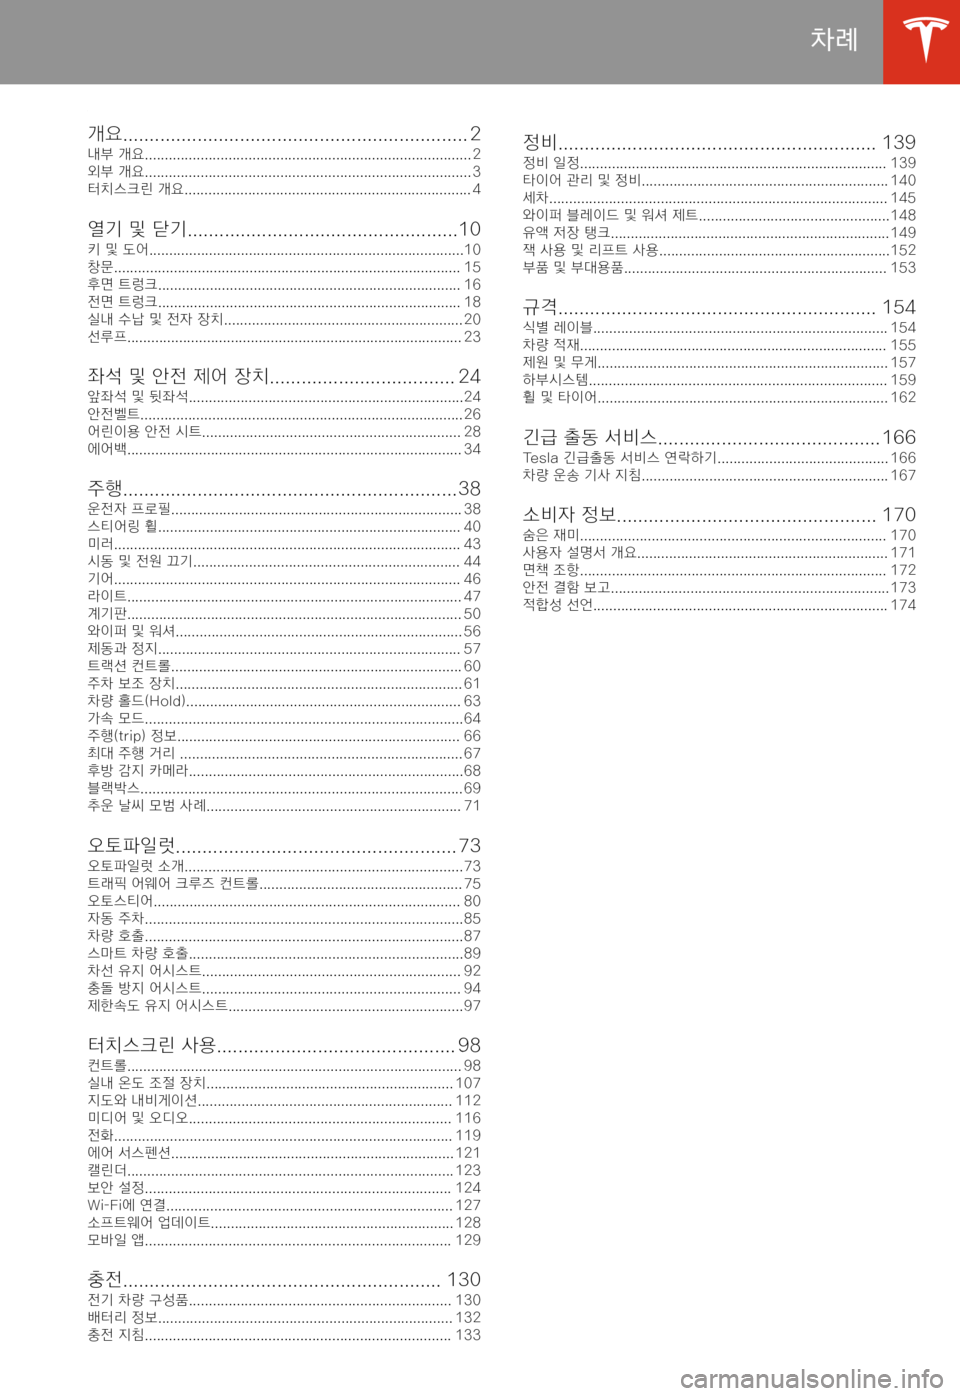 TESLA MODEL S 2020  사용자 가이드 (in Korean) BE.@
"9